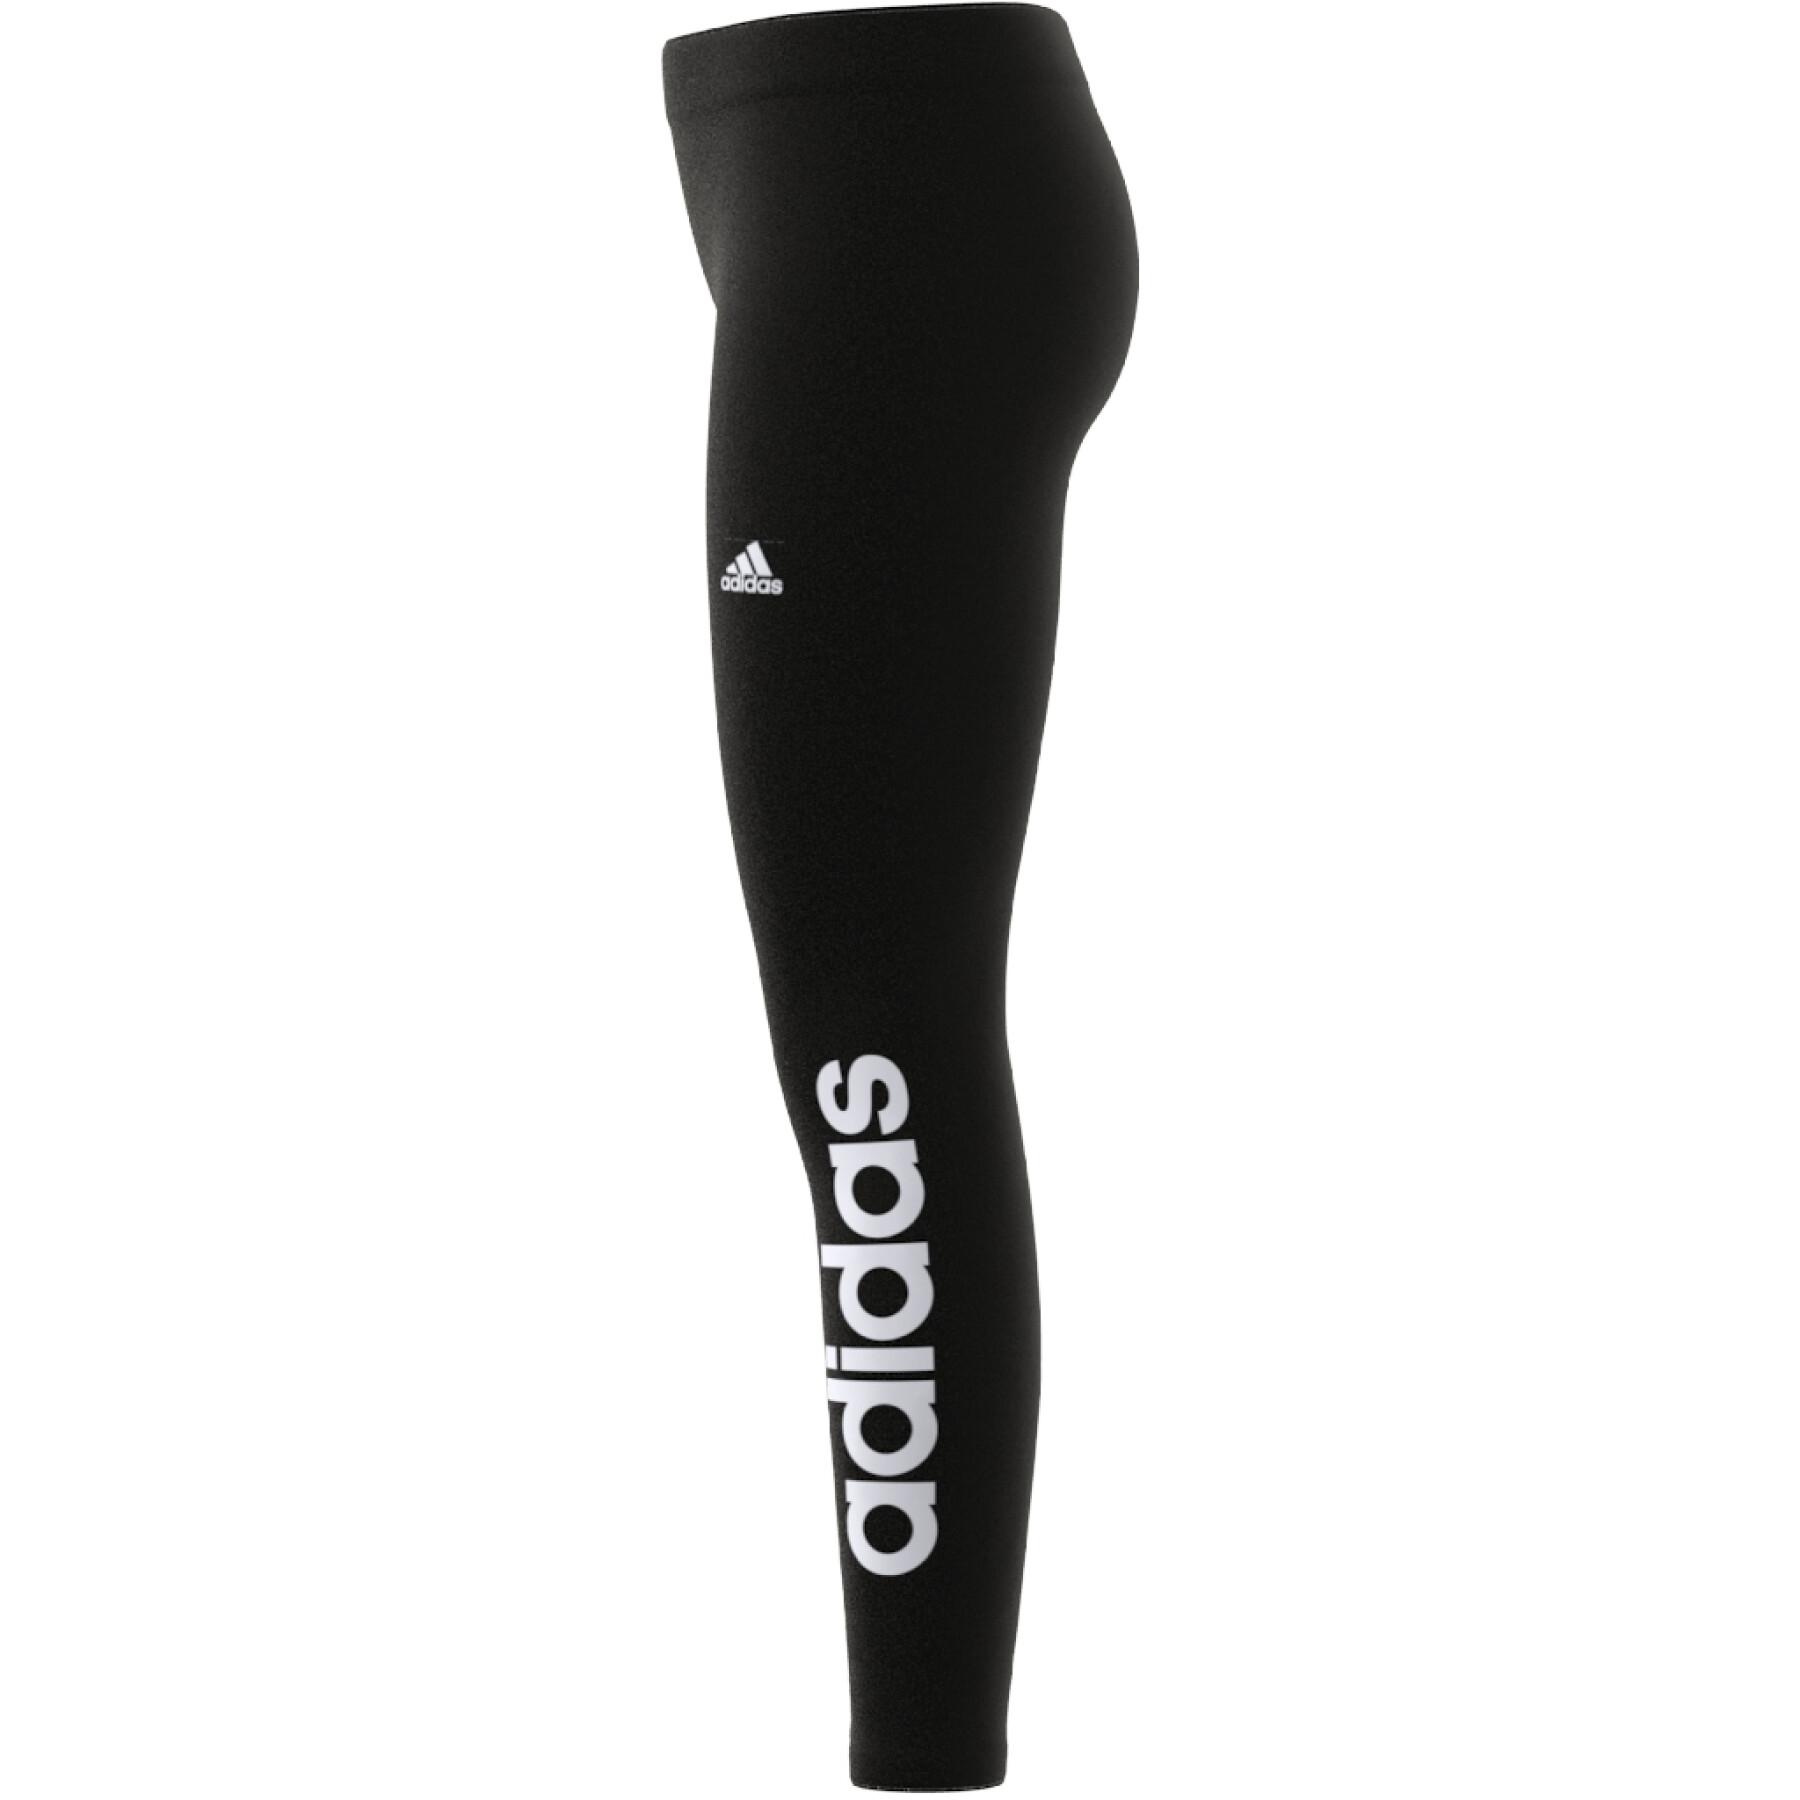 Legging cotton - Linear Handball Logo - wear girl adidas Baselayers Women\'s - Essentials wear